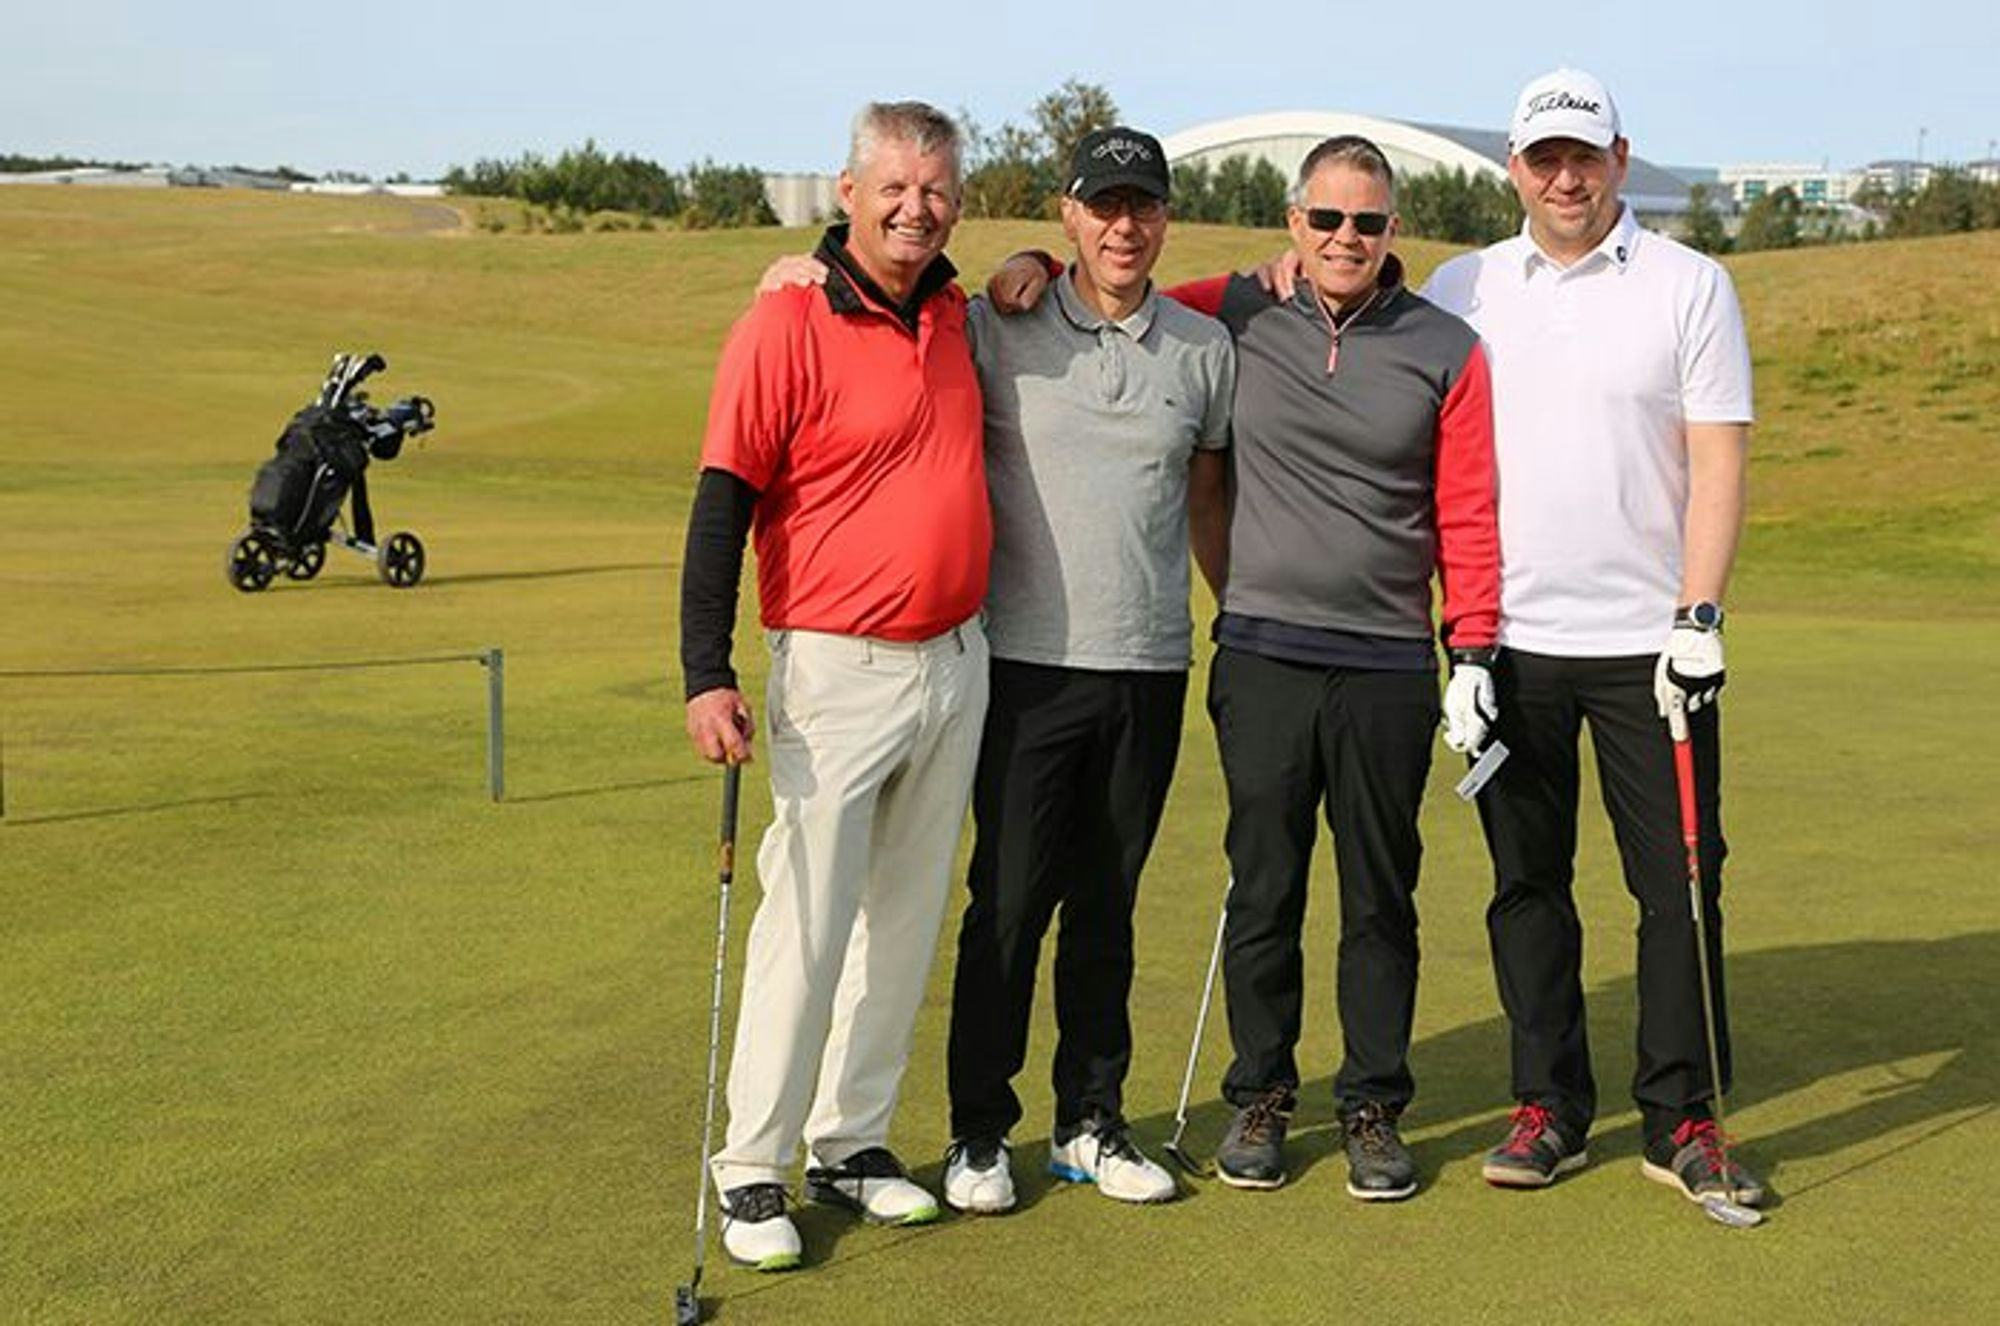 Four men posing on a golf course